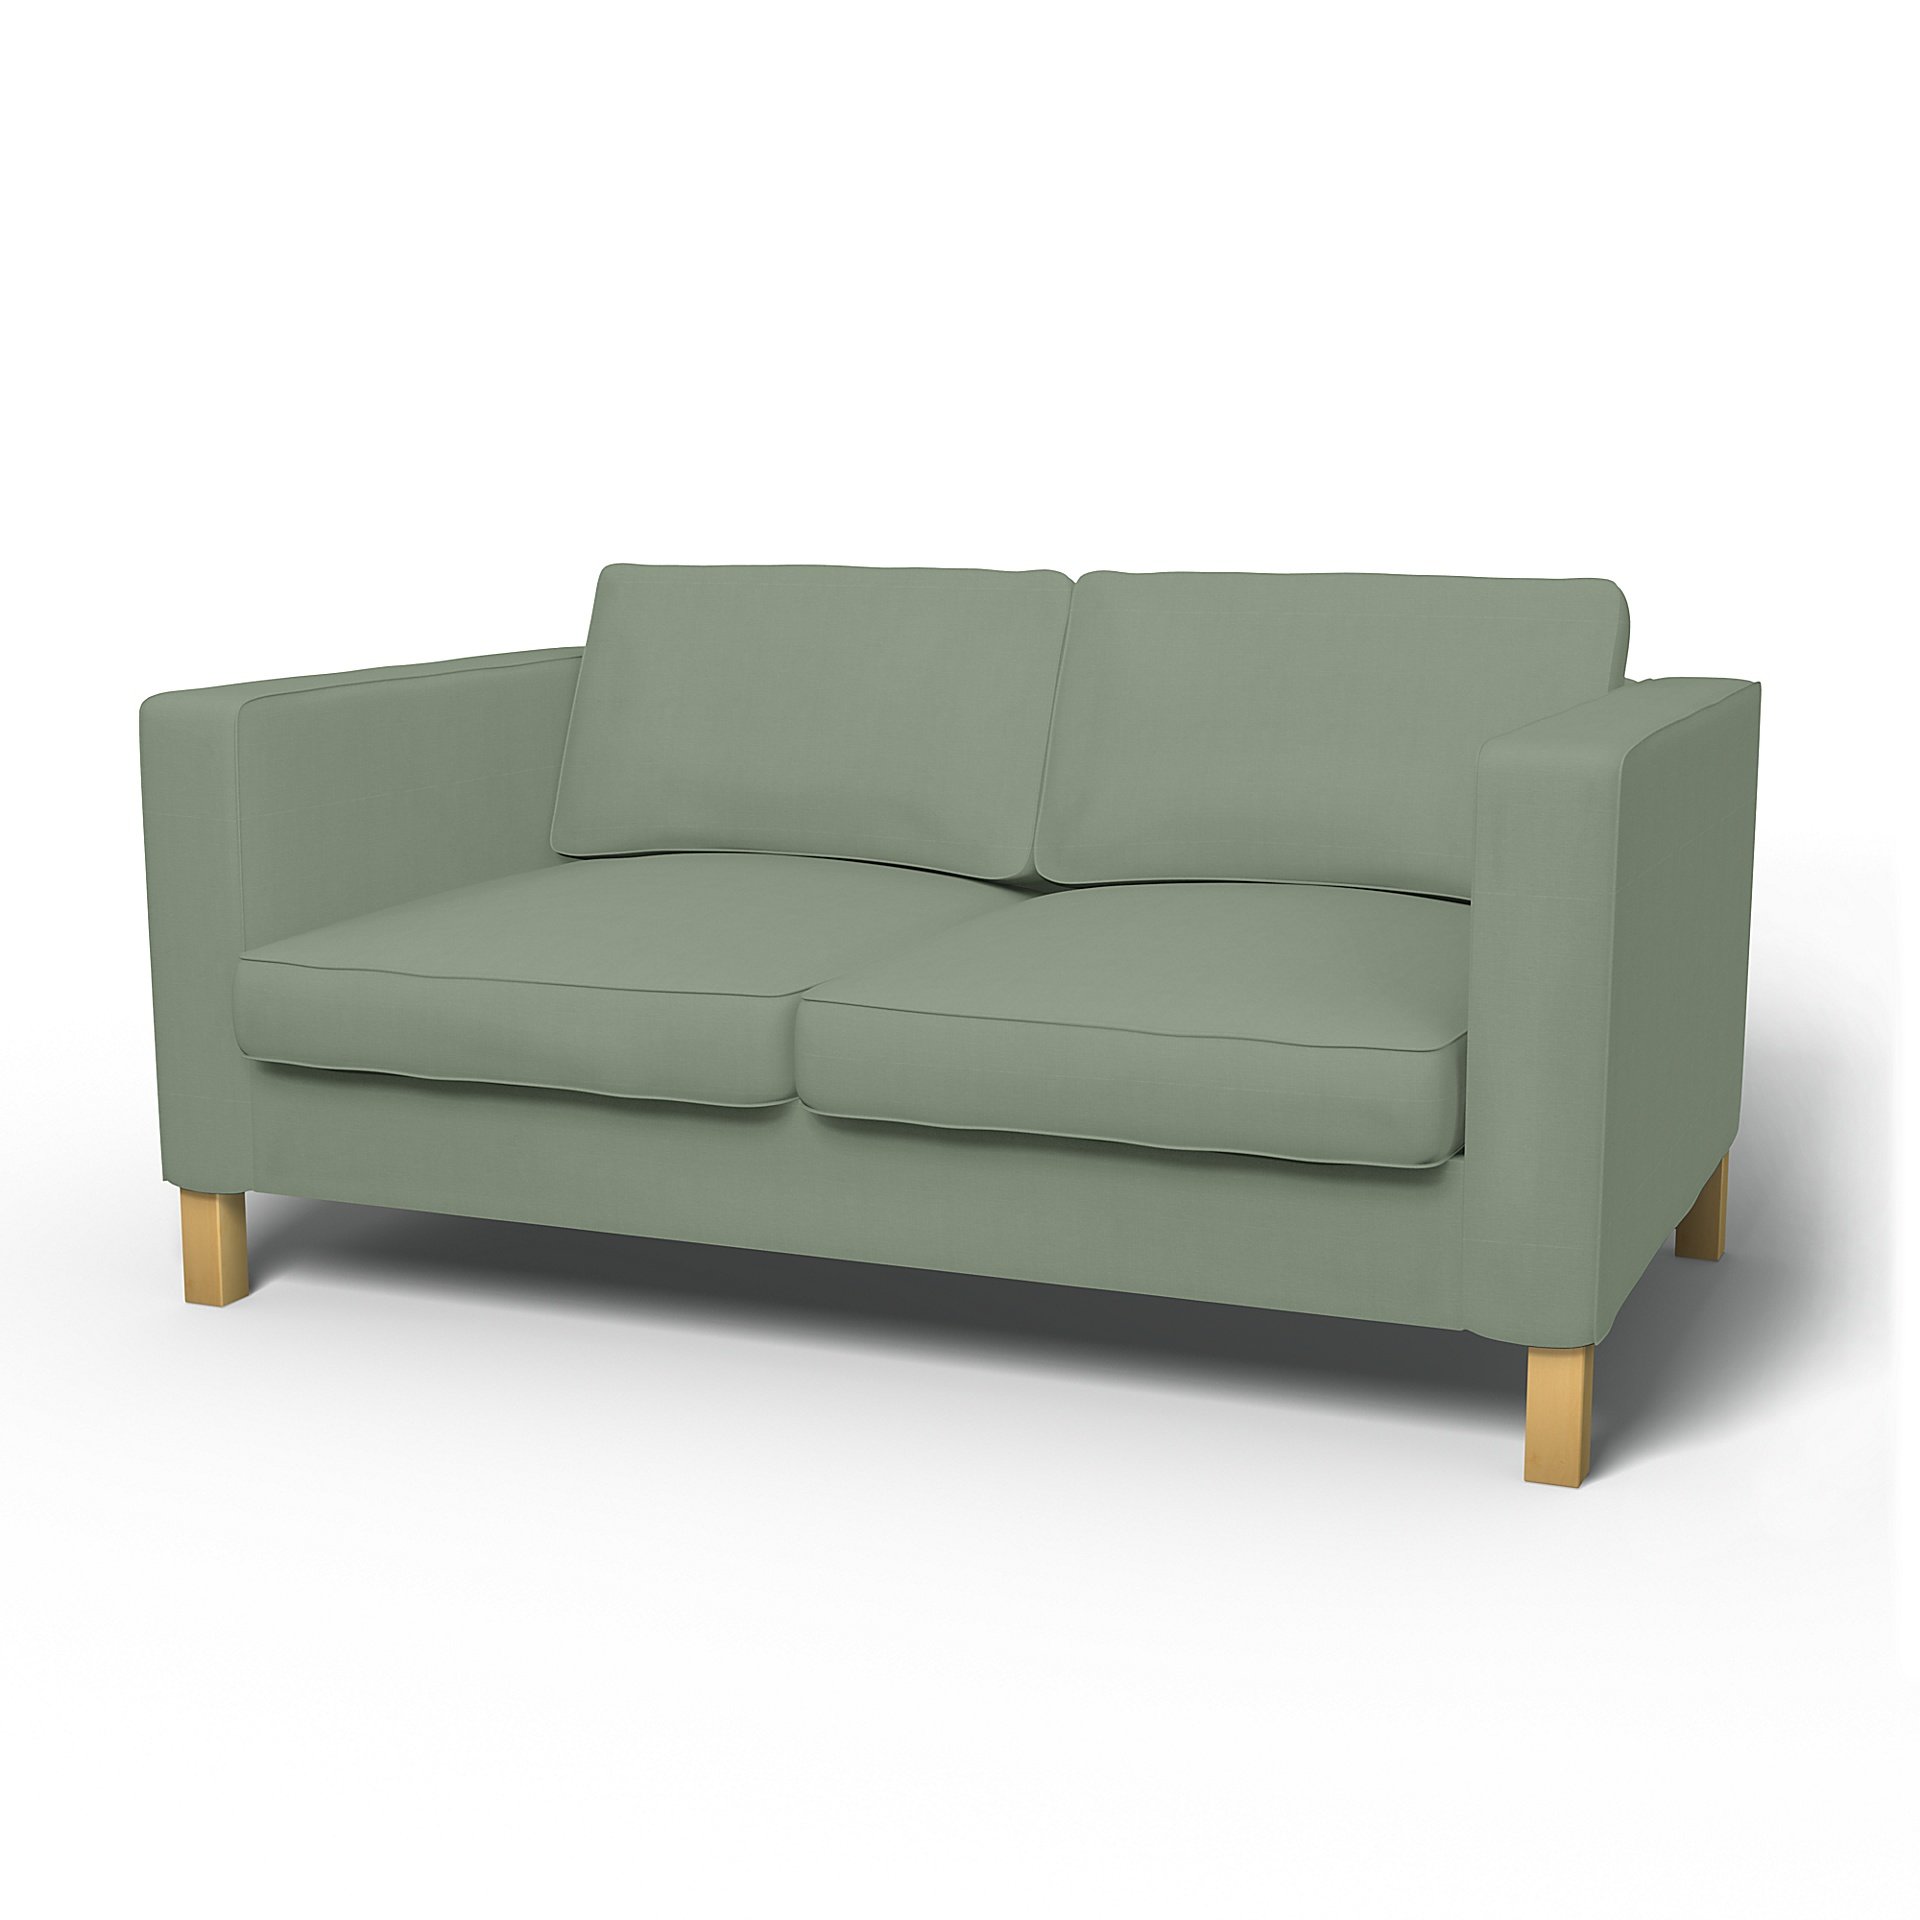 IKEA - Karlanda 2 Seater Sofa Cover, Seagrass, Cotton - Bemz